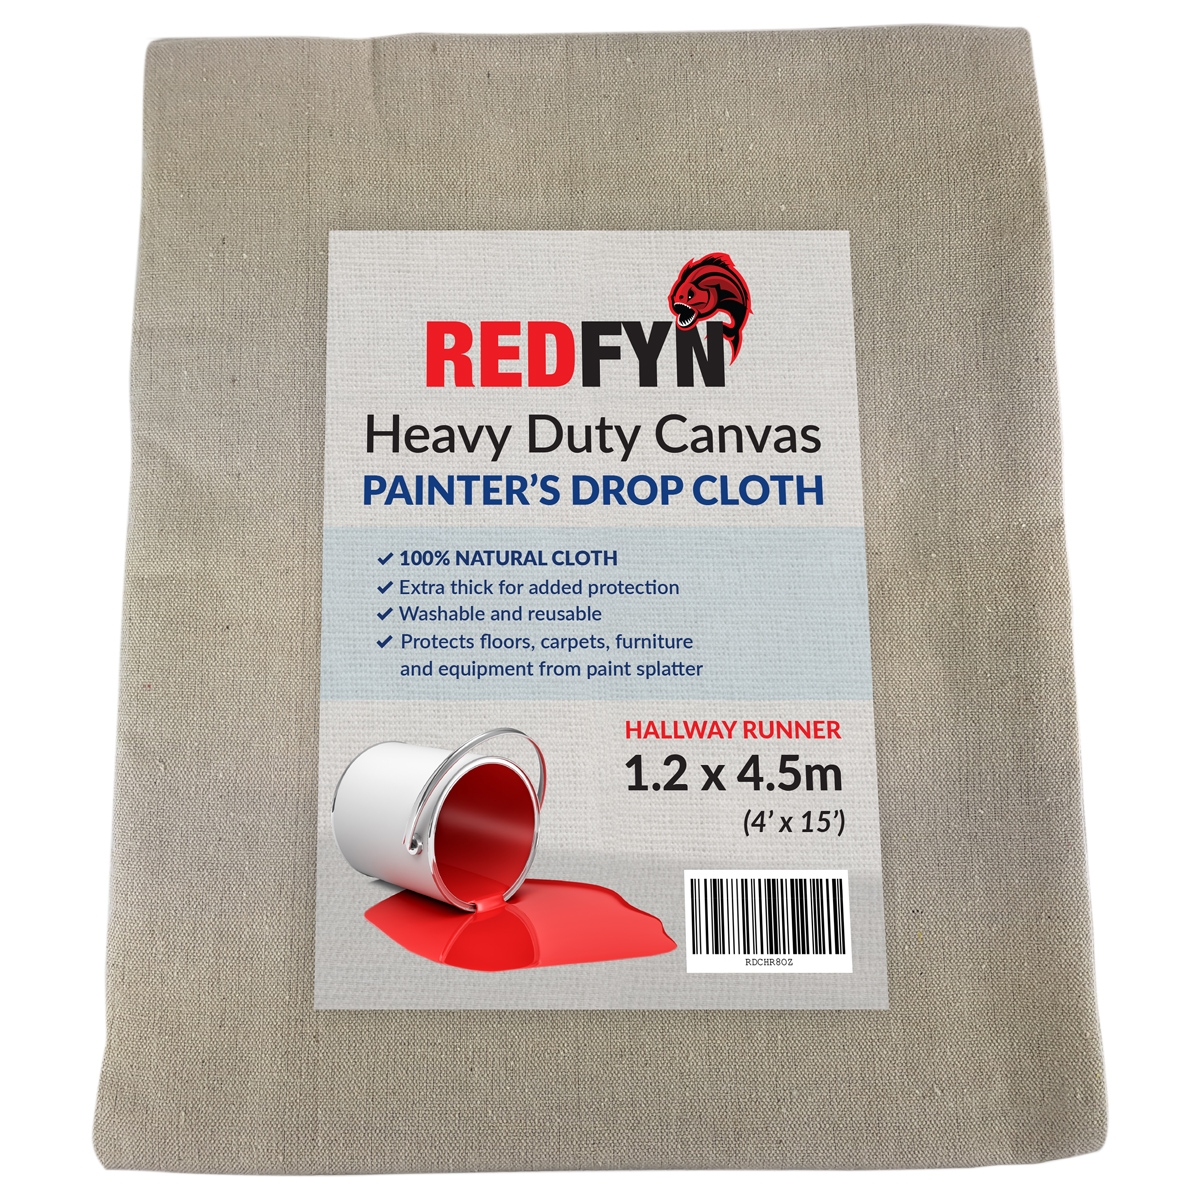 REDFYN Heavy Duty Painter's Drop Cloth Hallway Runner 15' x 4' (4.5m x 1.2m)